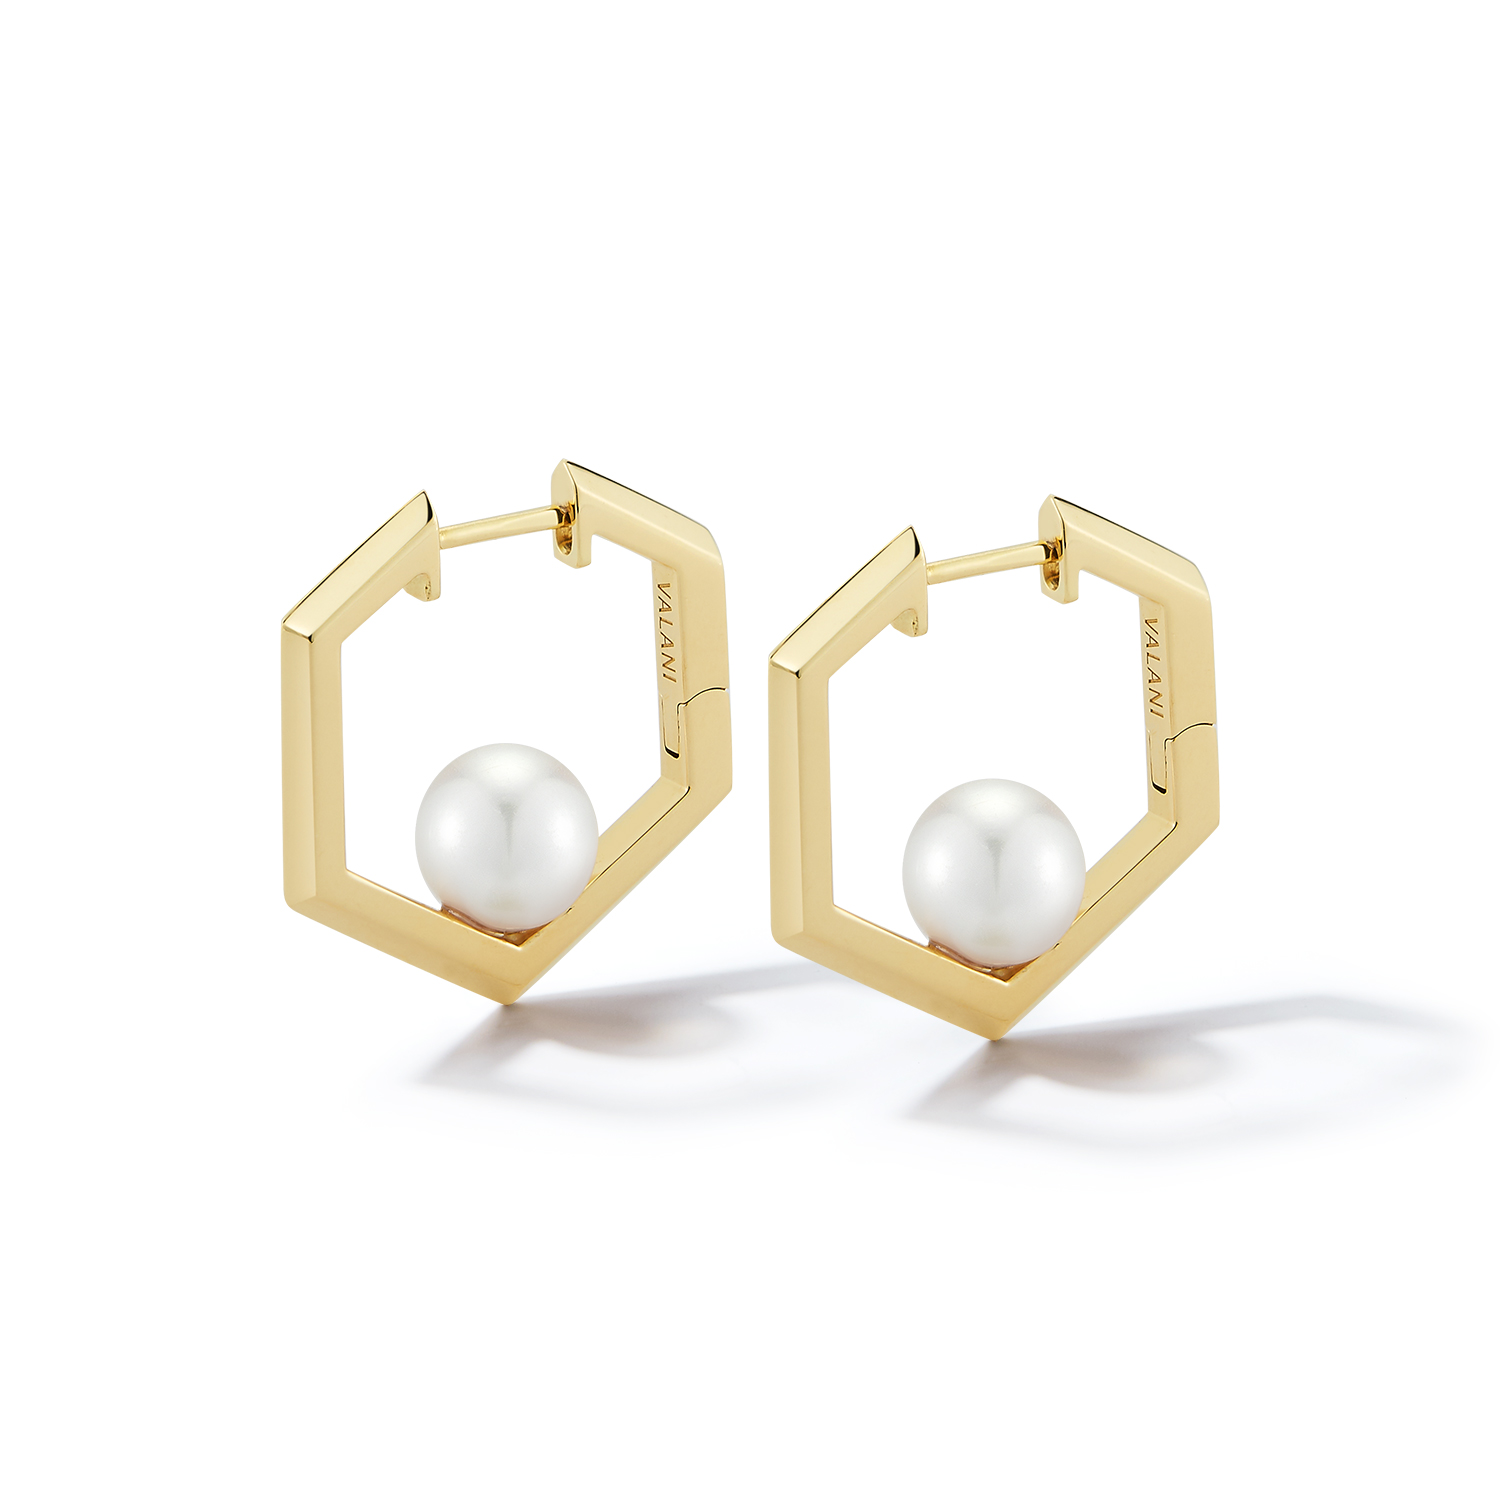 Kharis Hexa Pearl Earrings by Valani. 18K Gold Set with Japanese Akoya Pearls